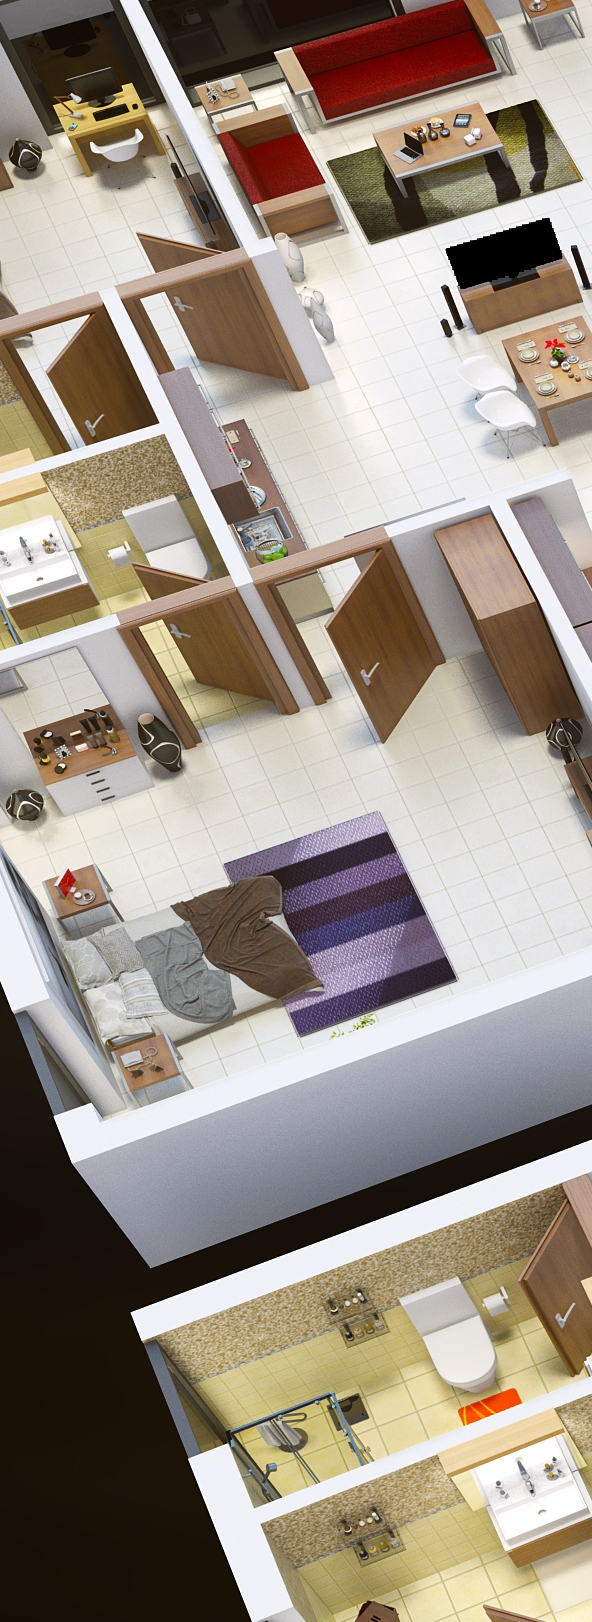 3D Isometric Interior visualization 3dsmax vray floor plan FLOOR composition rendering 3D model furniture cgmtl hi resolution